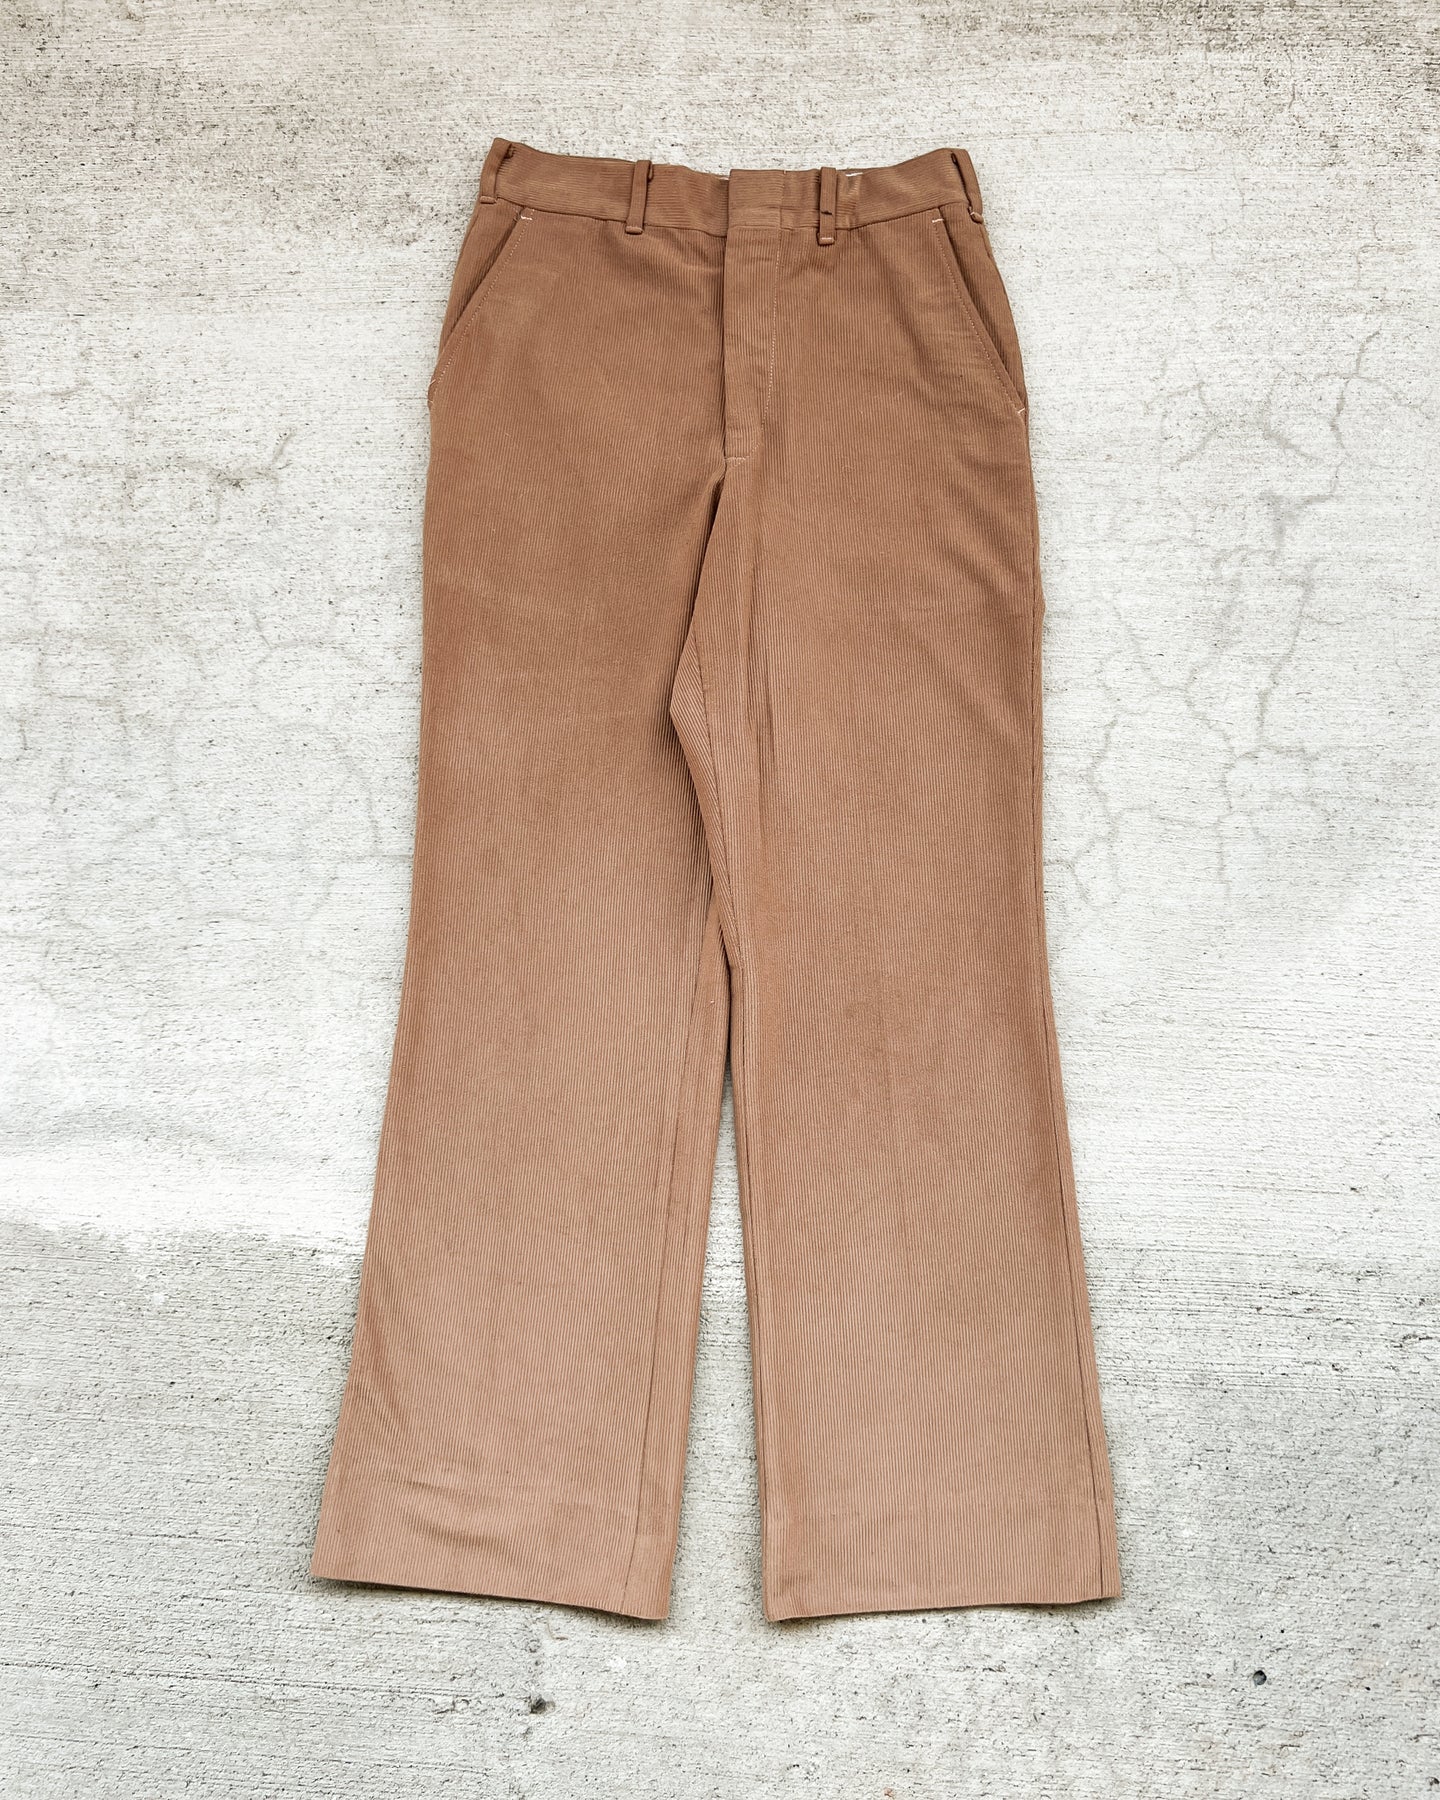 1970s Corduroy Flare Pants - Size 28 x 29